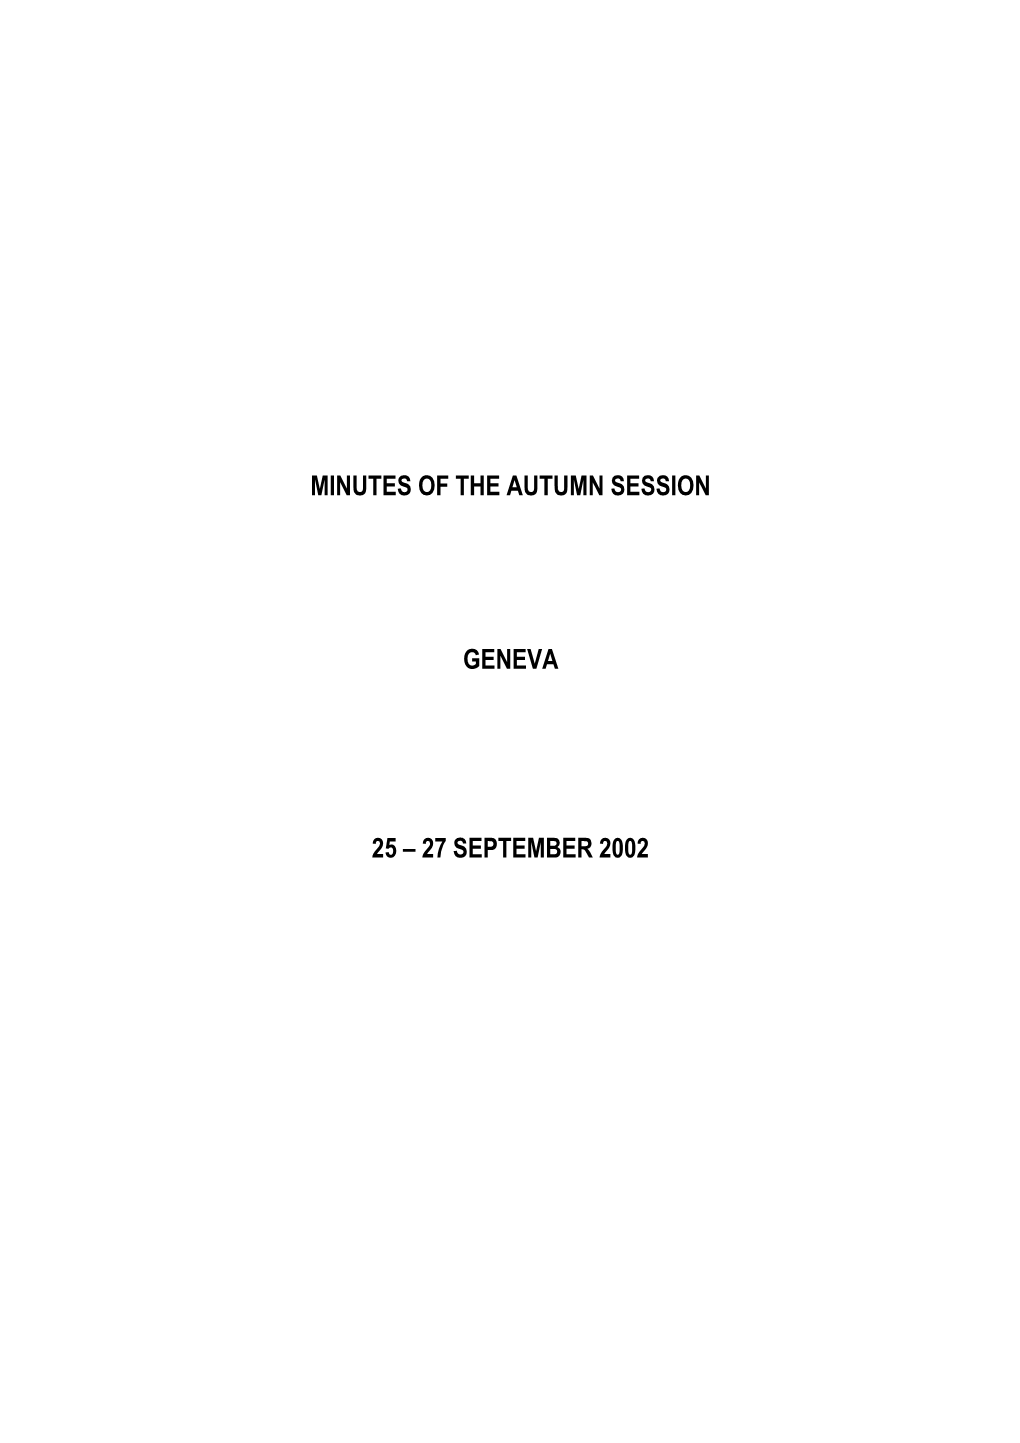 Minutes of the Autumn Session Geneva 25 – 27 September 2002